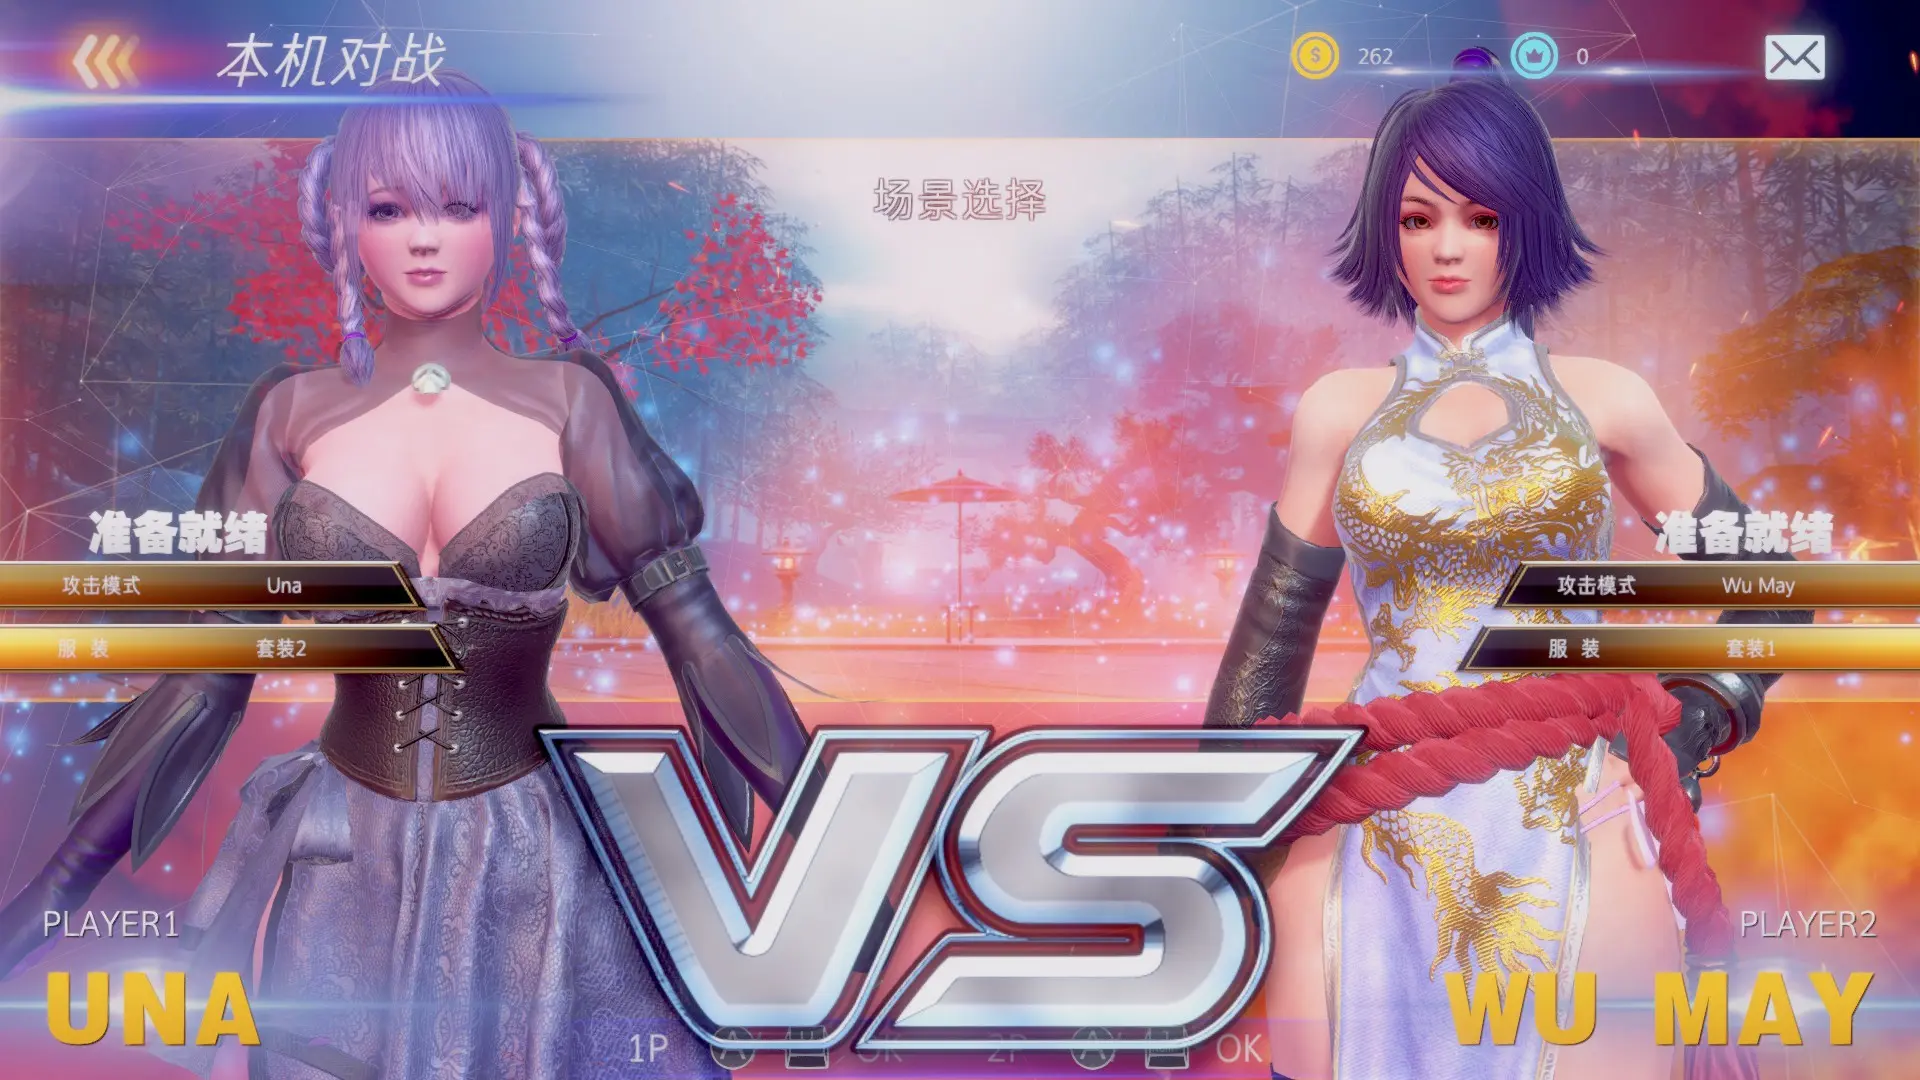 [PC]《斗天使SE Fight Angel Special Edition》中文版，版本：V1.01-特别终极版+全DLC